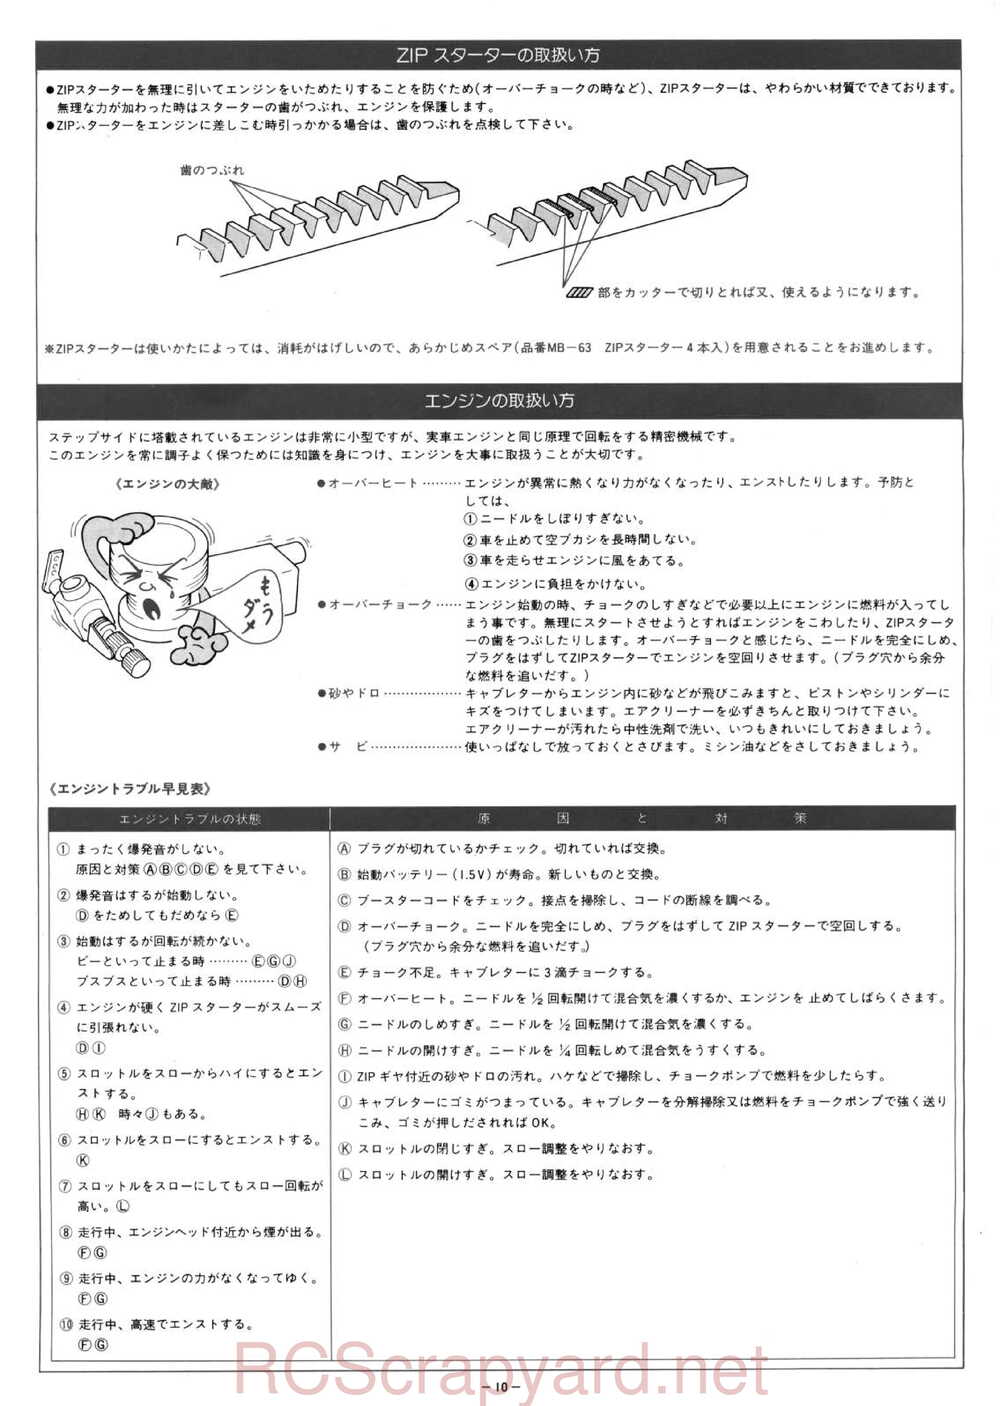 Kyosho - 3085 - Minitz-06 - Datsun-Stepside - Manual - Page 10